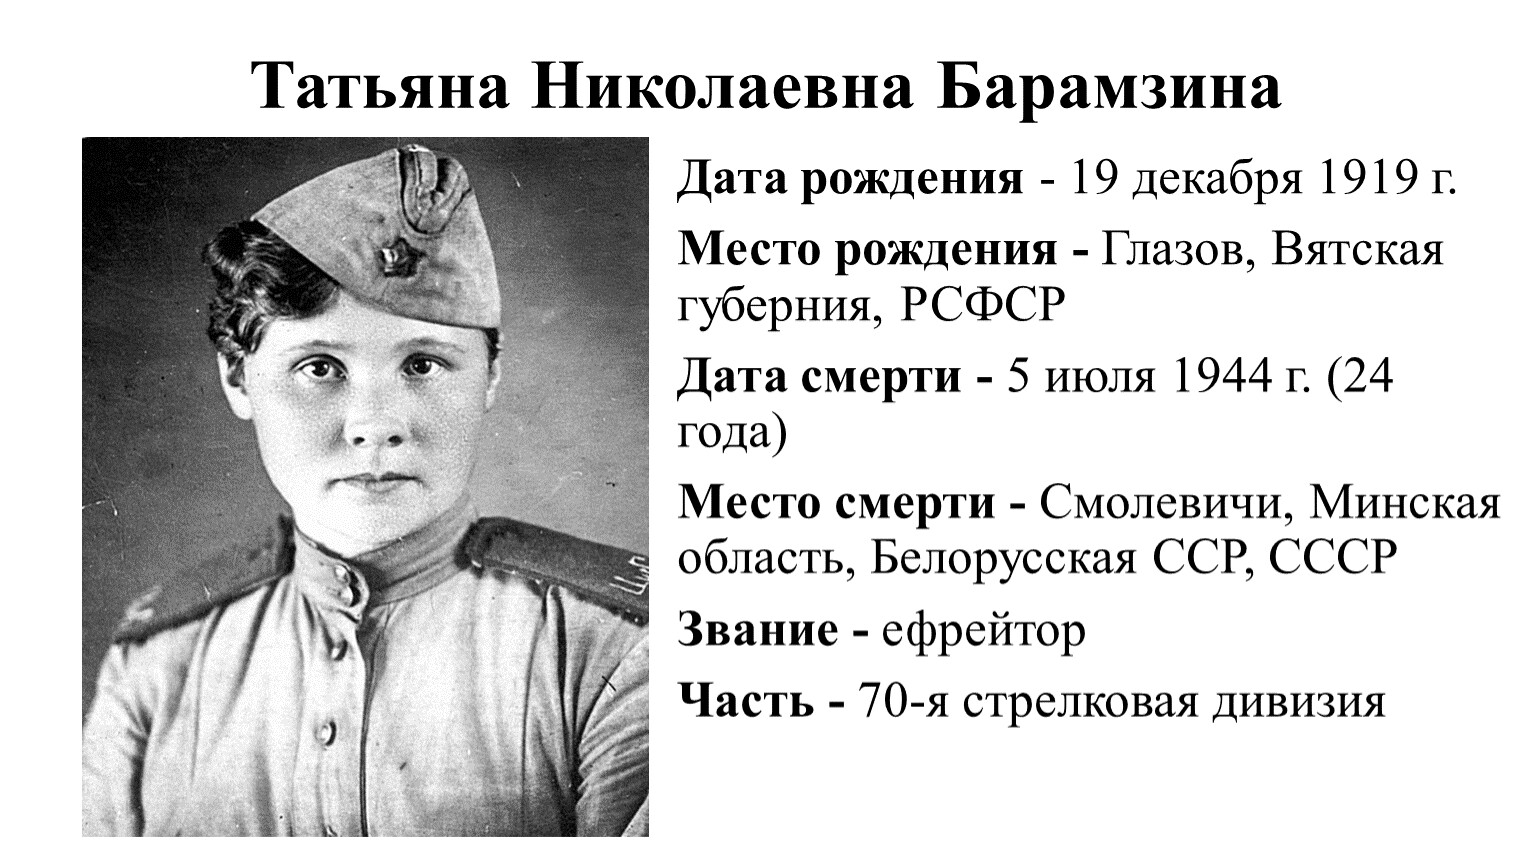 Барамзина Татьяна Николаевна герой советского Союза